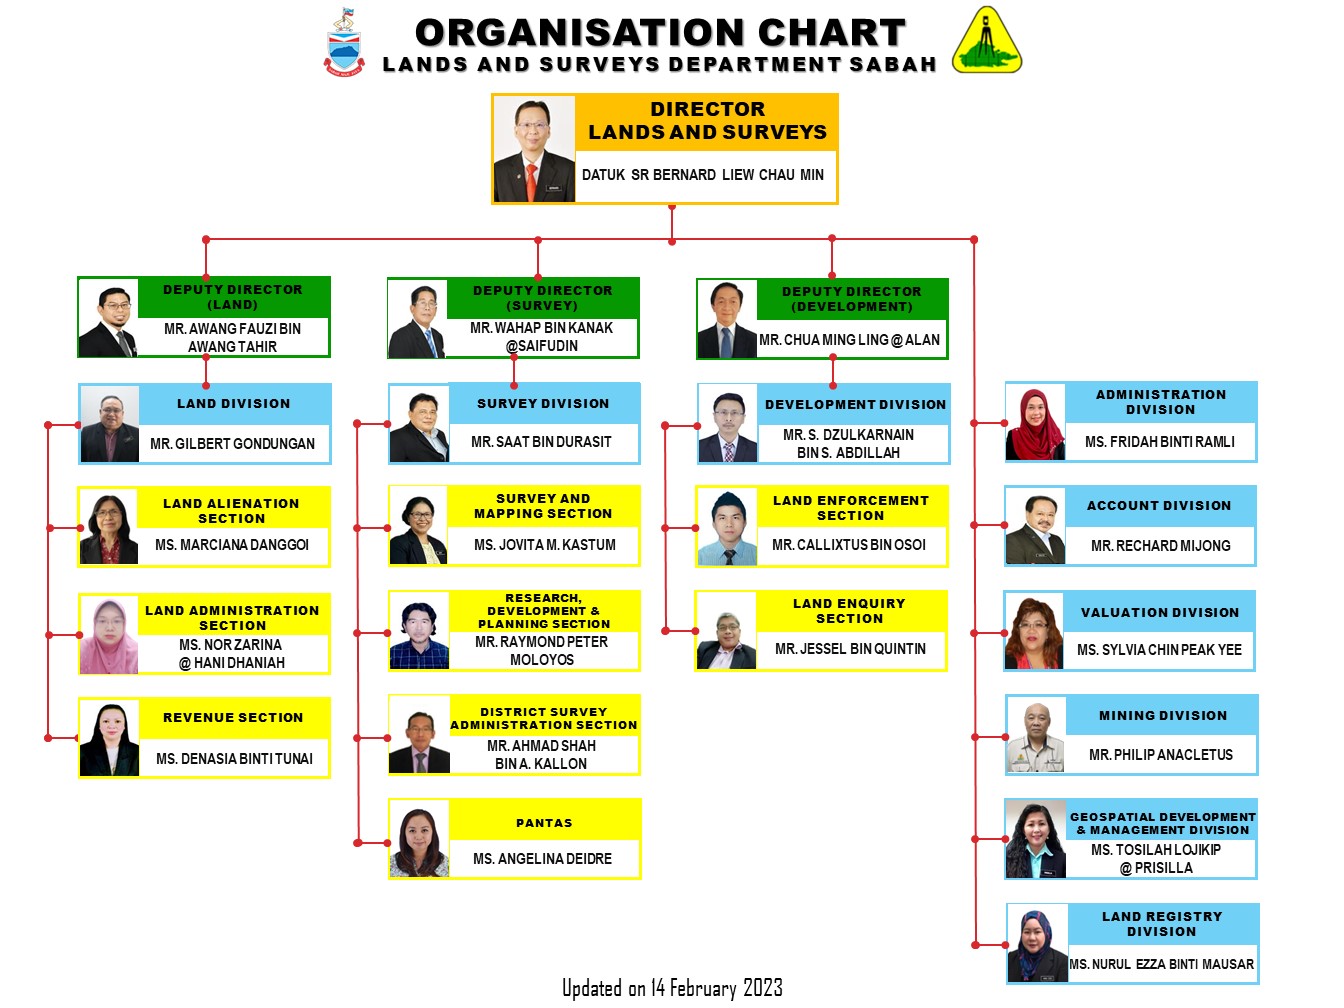 Portal Rasmi Jabatan Tanah Dan Ukur Sabah - Organisation Chart